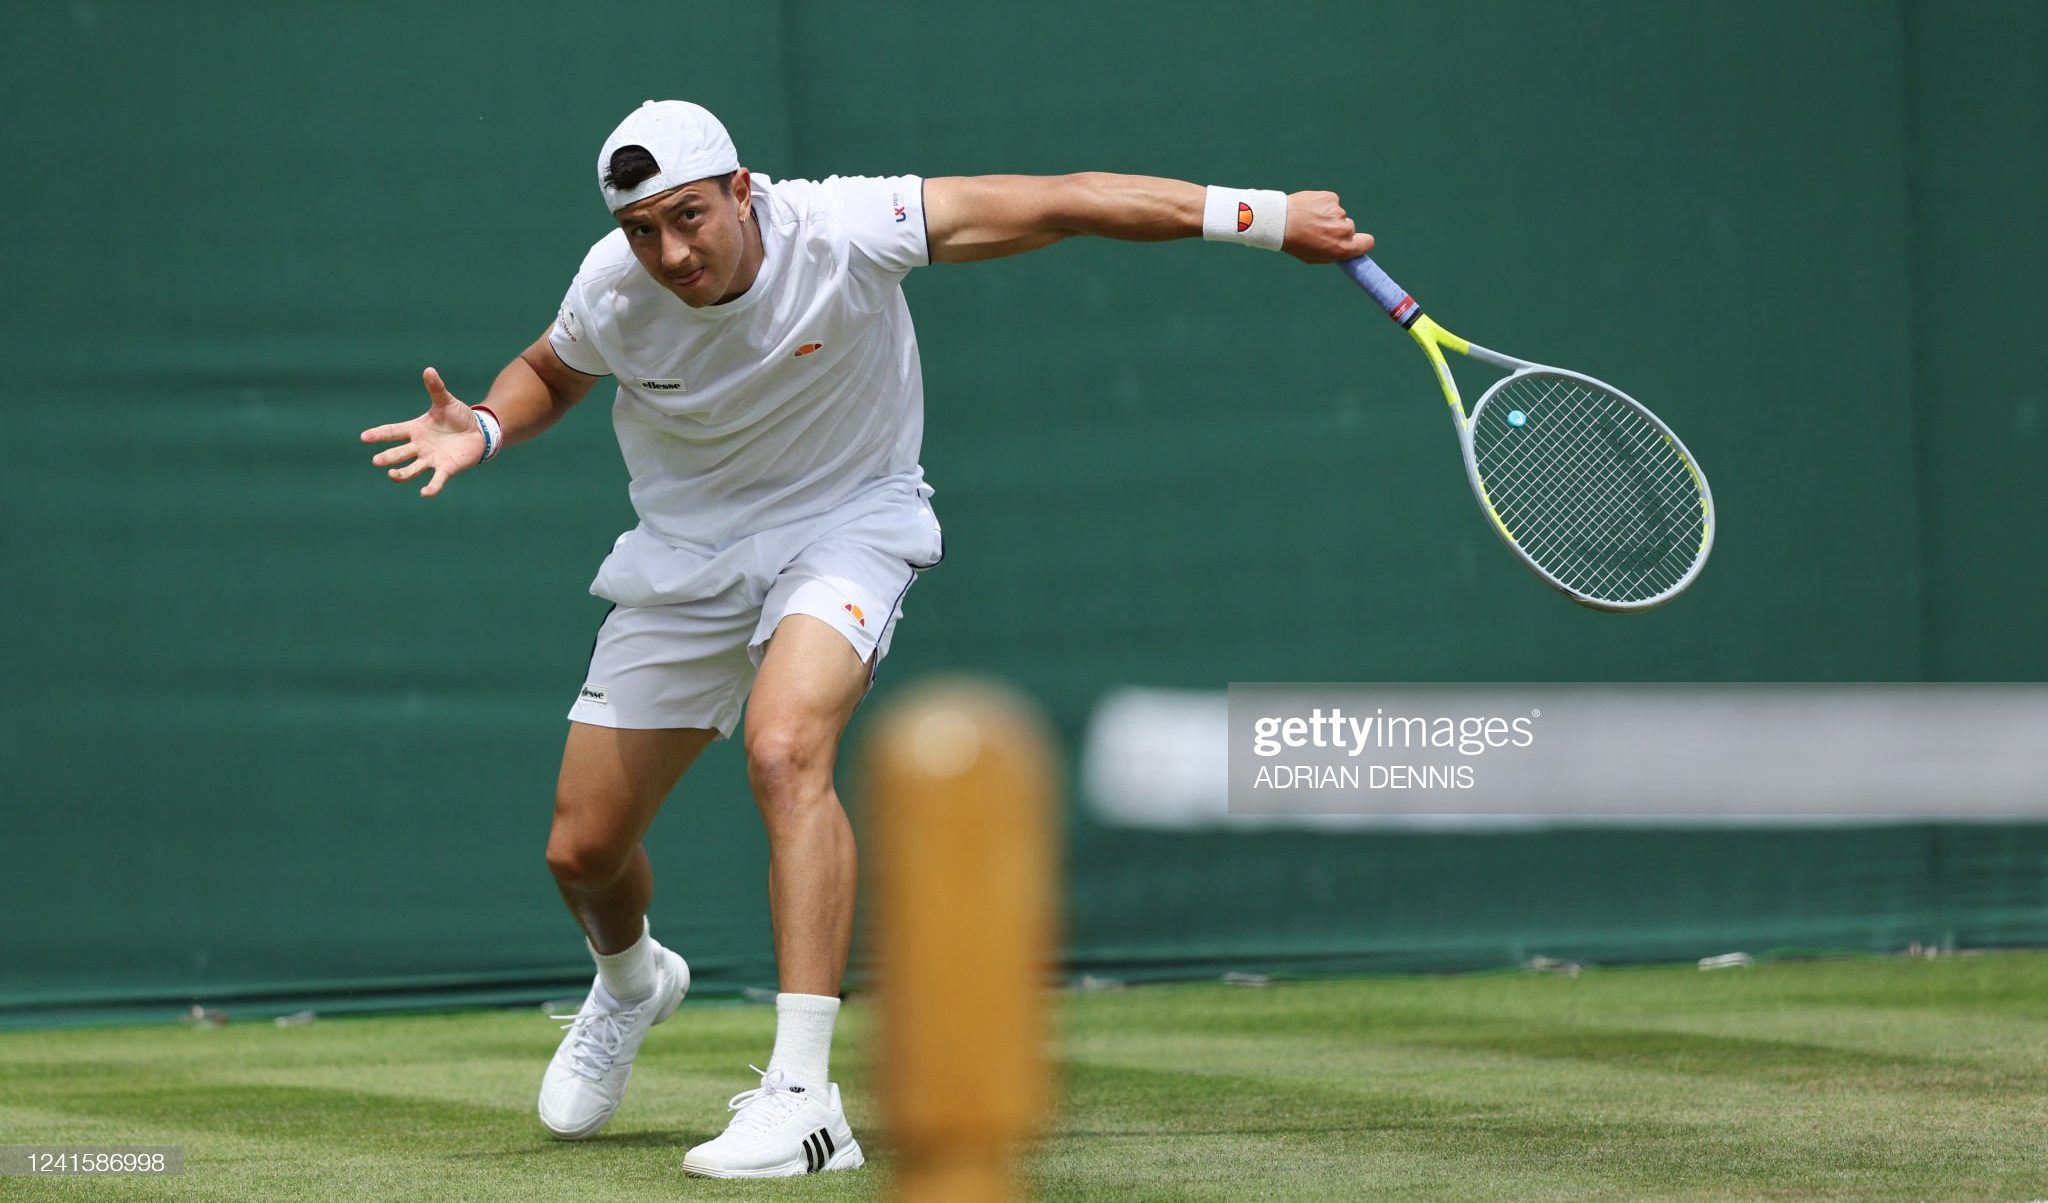 Ryan Peniston Triumphs on his Wimbledon Singles Debut Defeating World No. 96, Henri Laaksonen